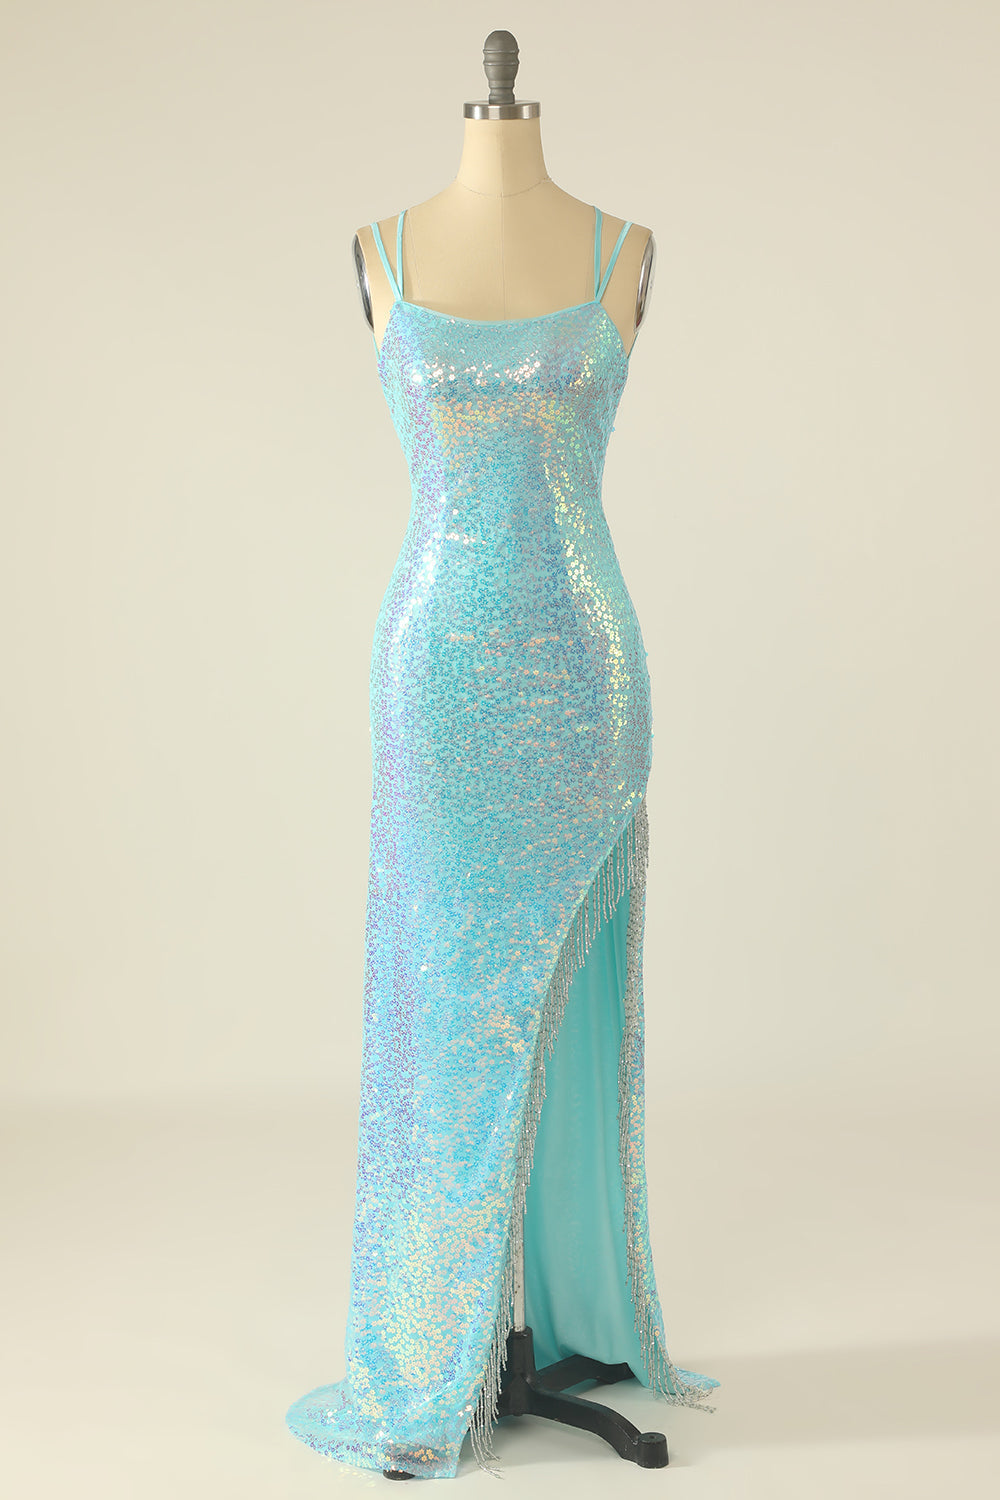 Lavender Sequin Prom Dress with Fringes